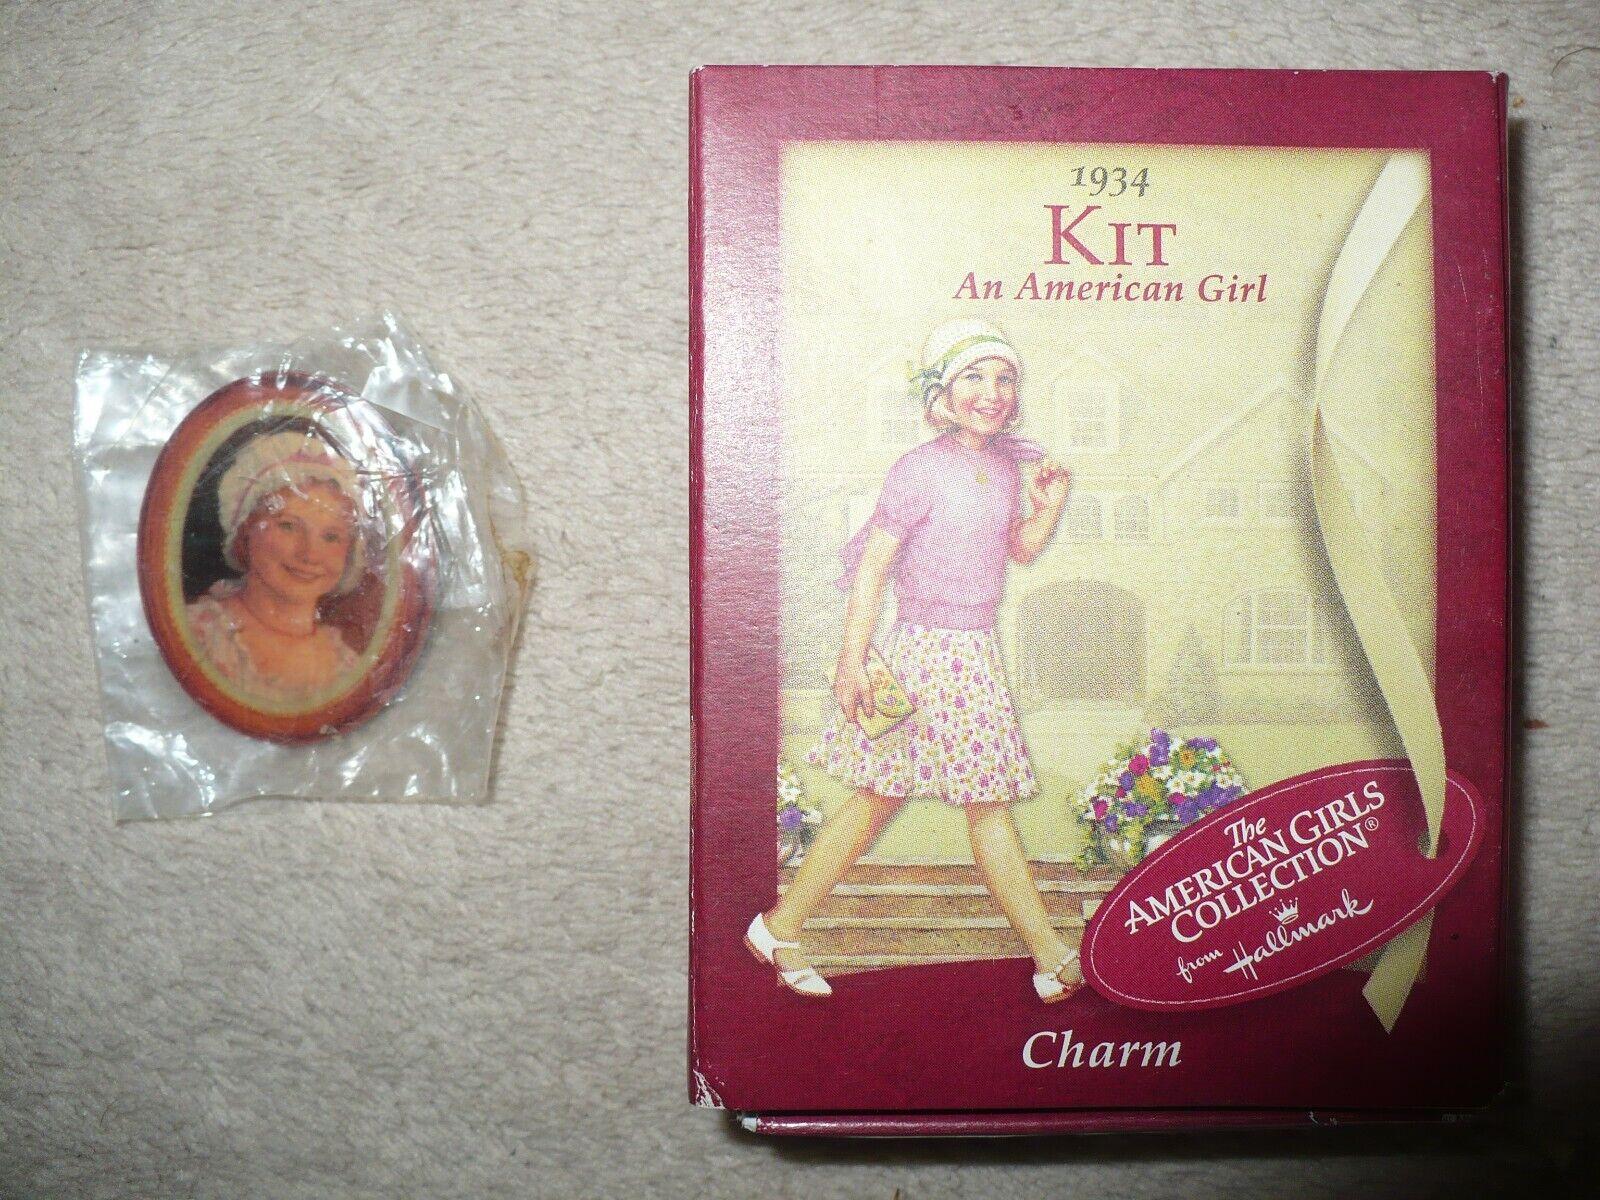 2002 American Girl KIT Charm Hallmark Collection with pin and original box